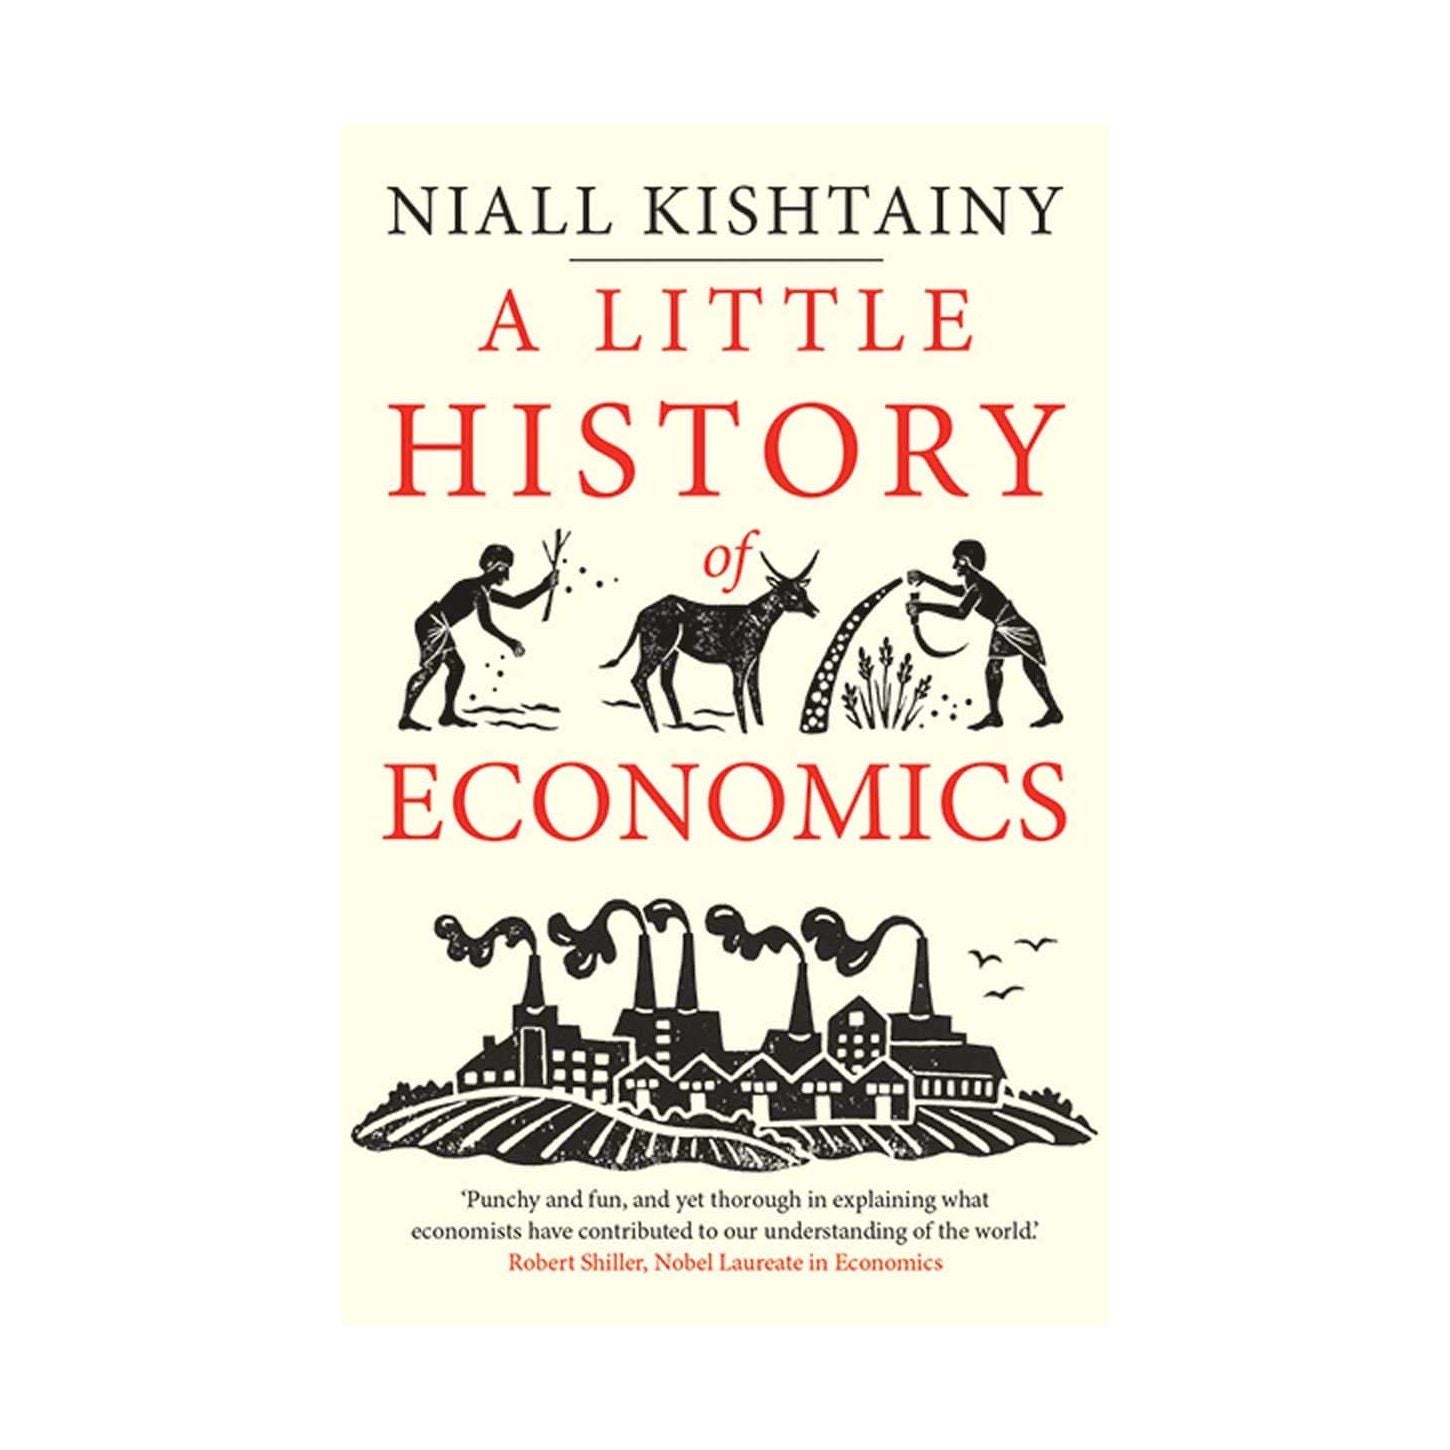 A Little History of Economics - Niall Kishtainy